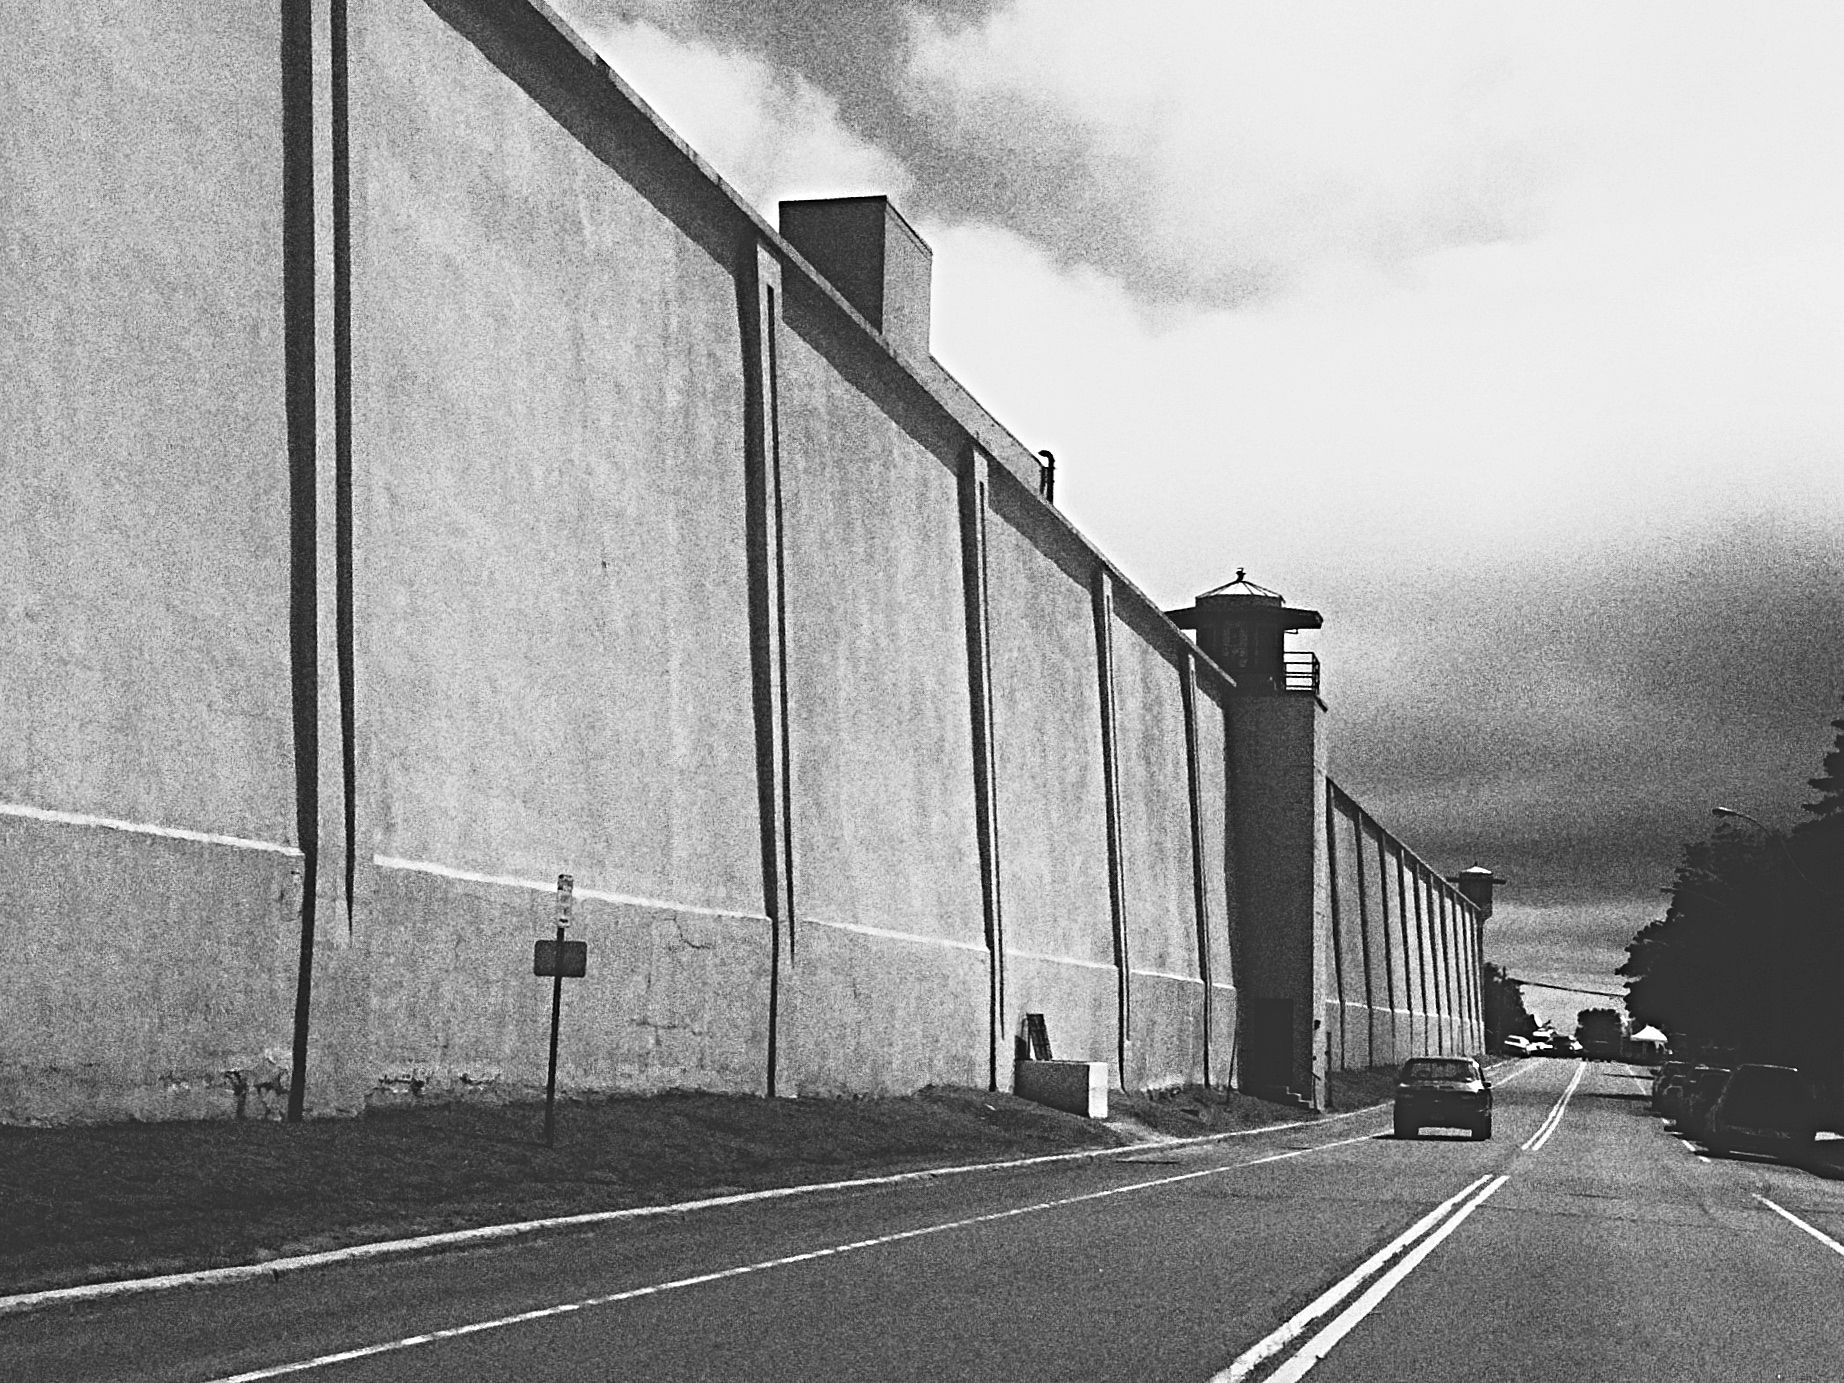  Clinton Correctional Facility's perimeter wall.  (Chelsia Rose Marcius/June 19, 2015)&nbsp;  